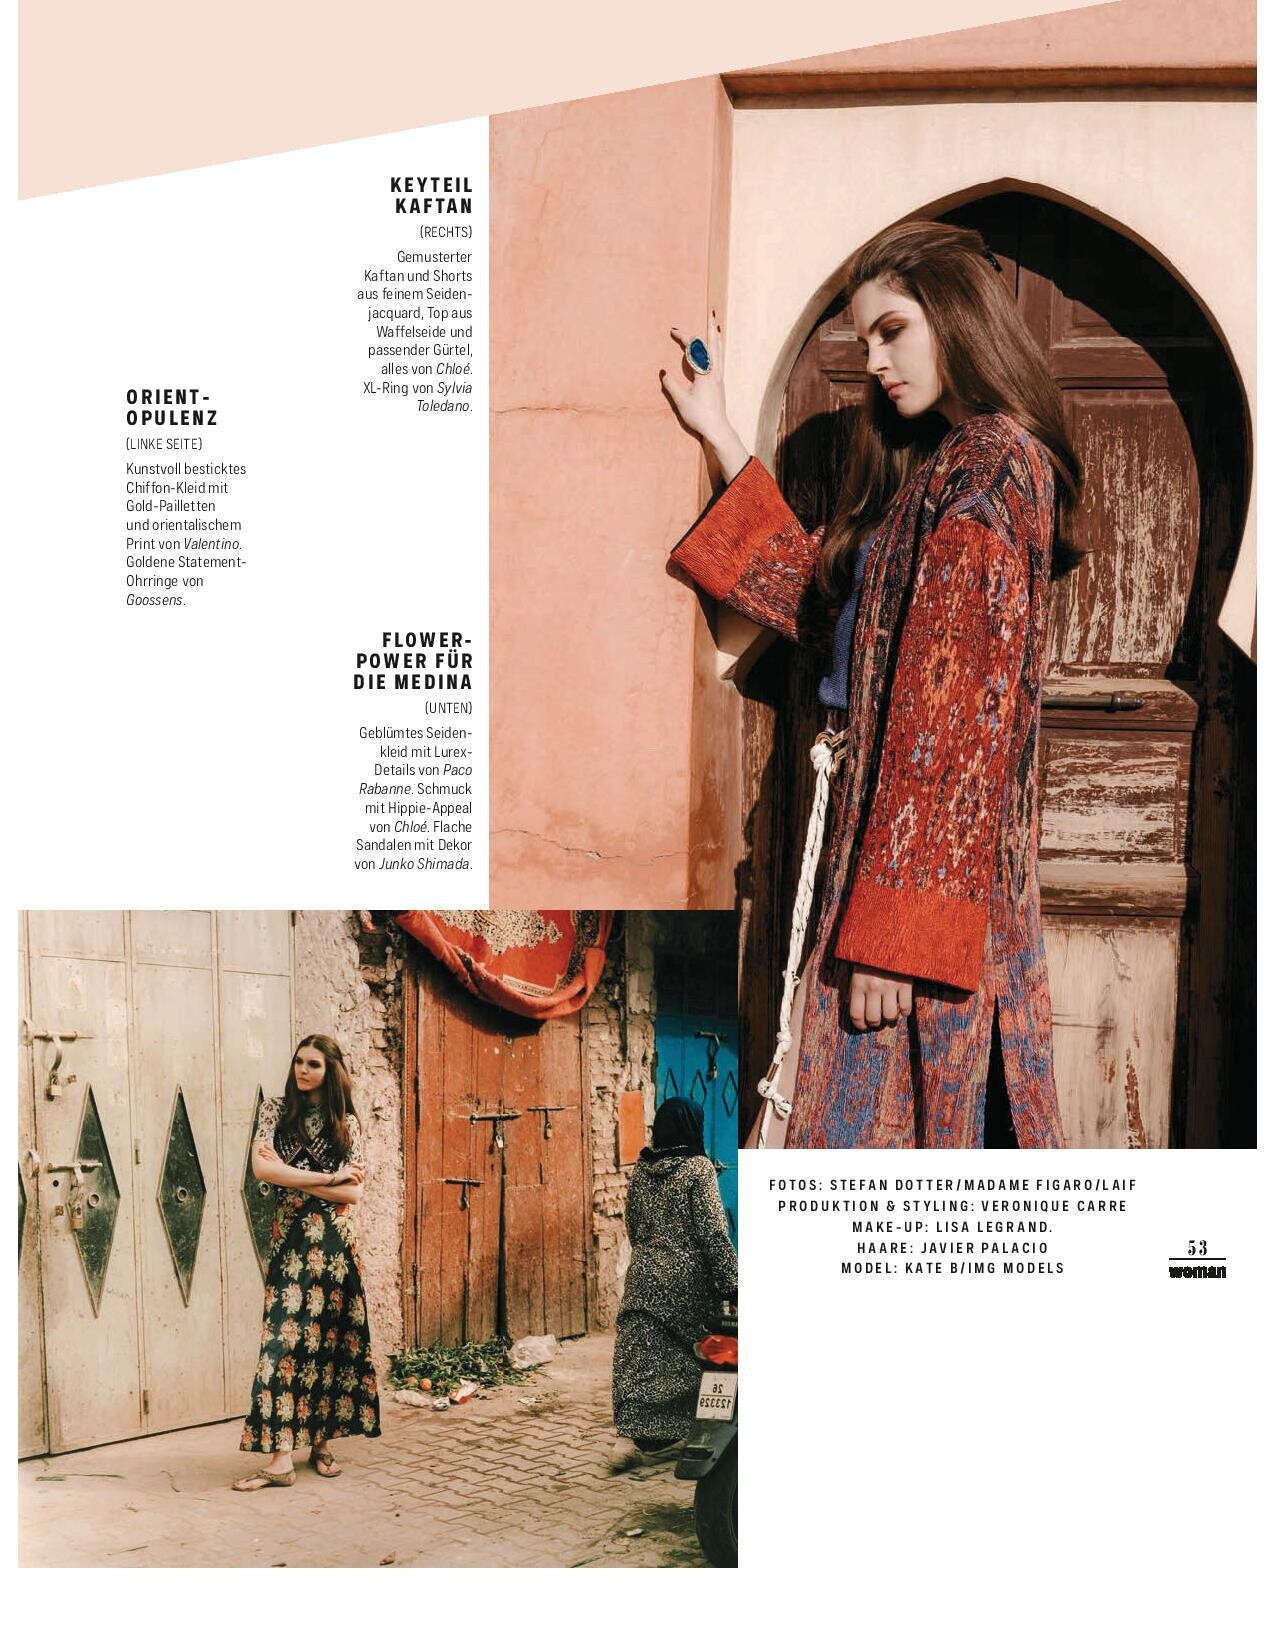 Woman Austria magazine models - Page 4 - General Discussion - Bellazon